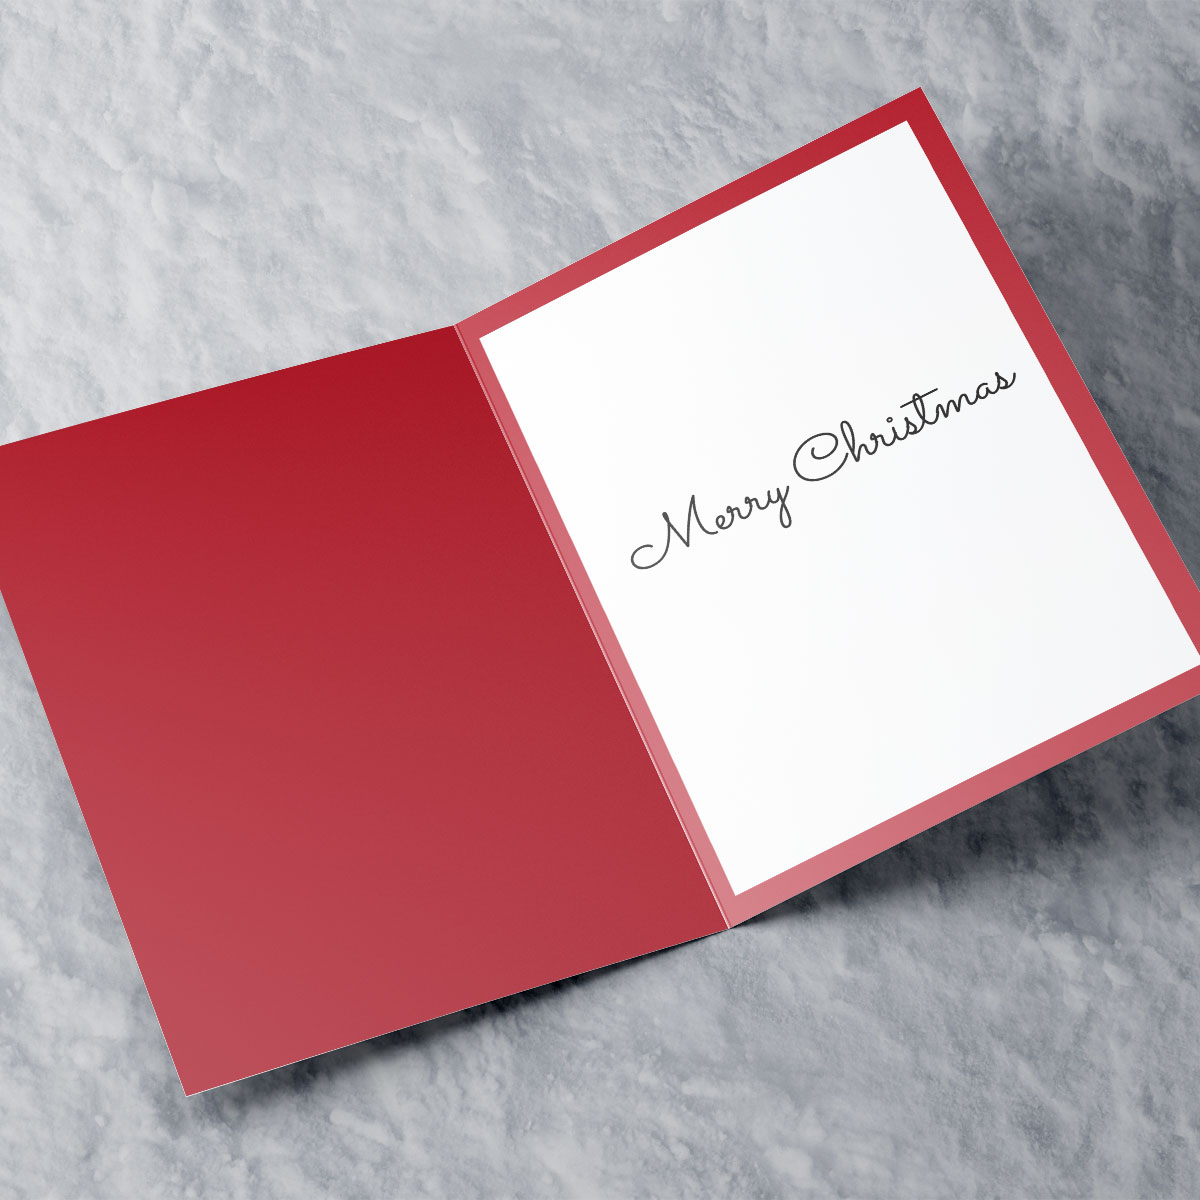 Personalised Christmas Card - Santa's Sleigh Godson